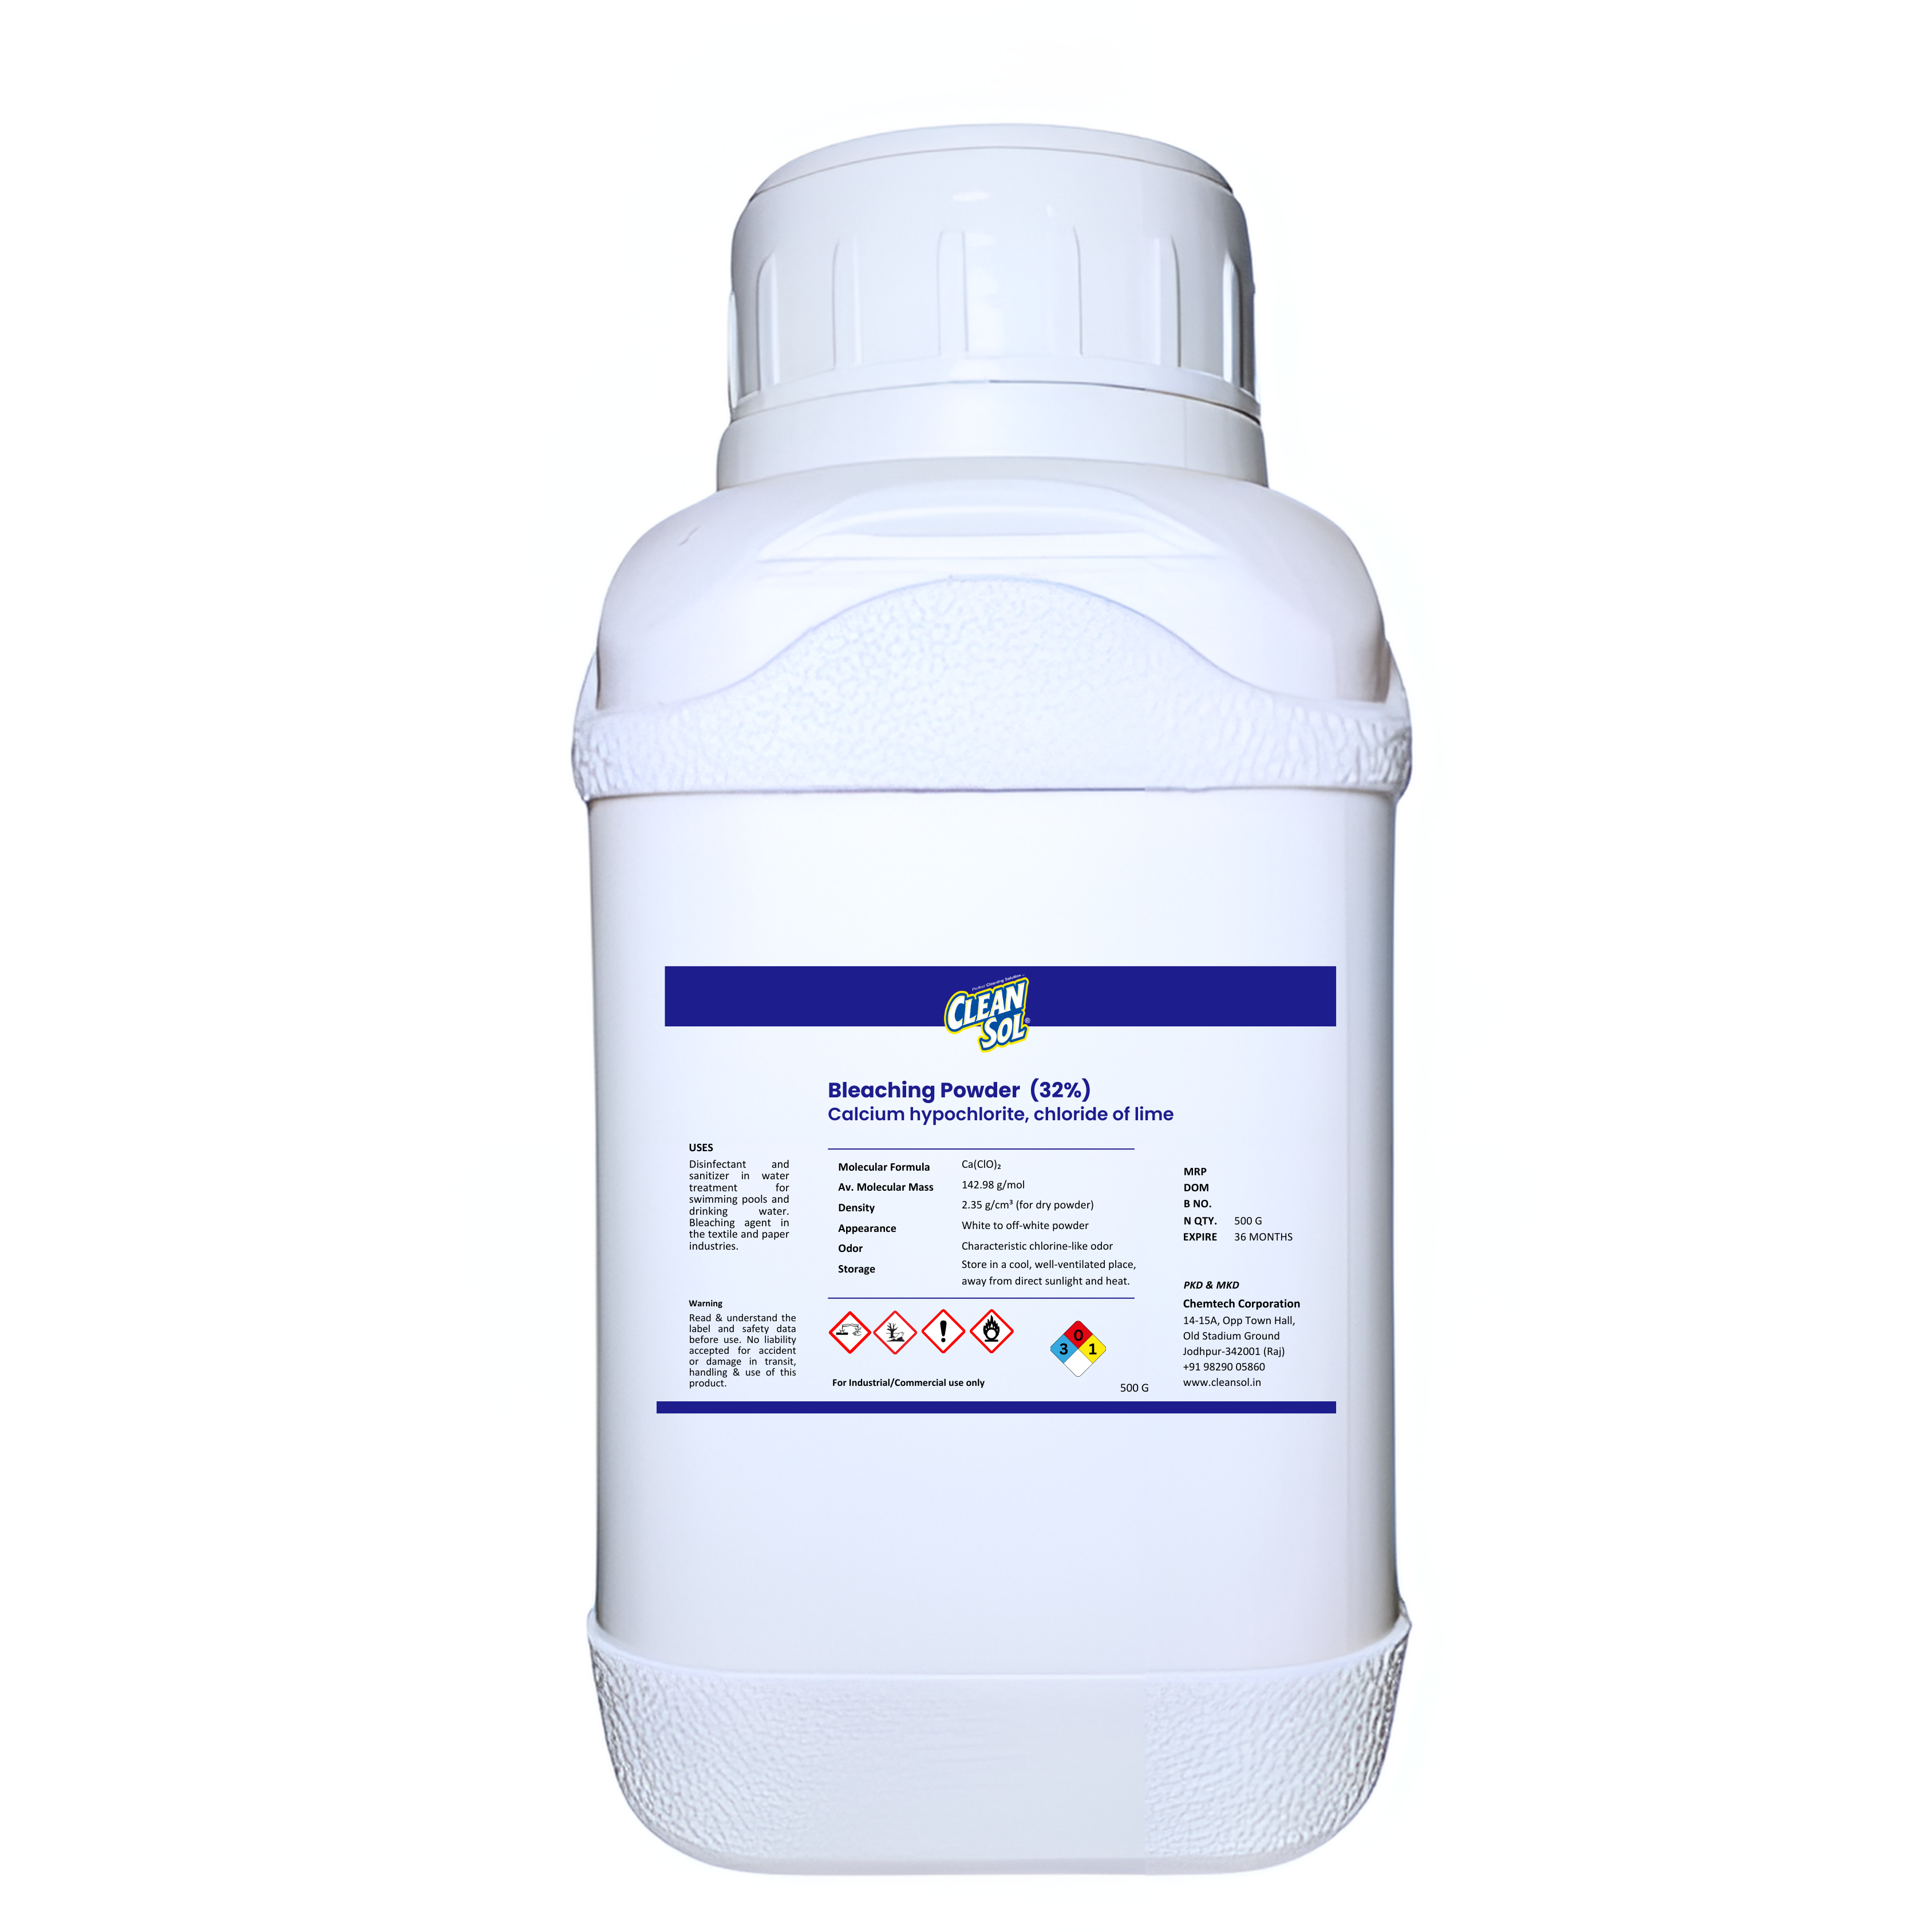 Bleaching Powder (32%), Calcium hypochlorite